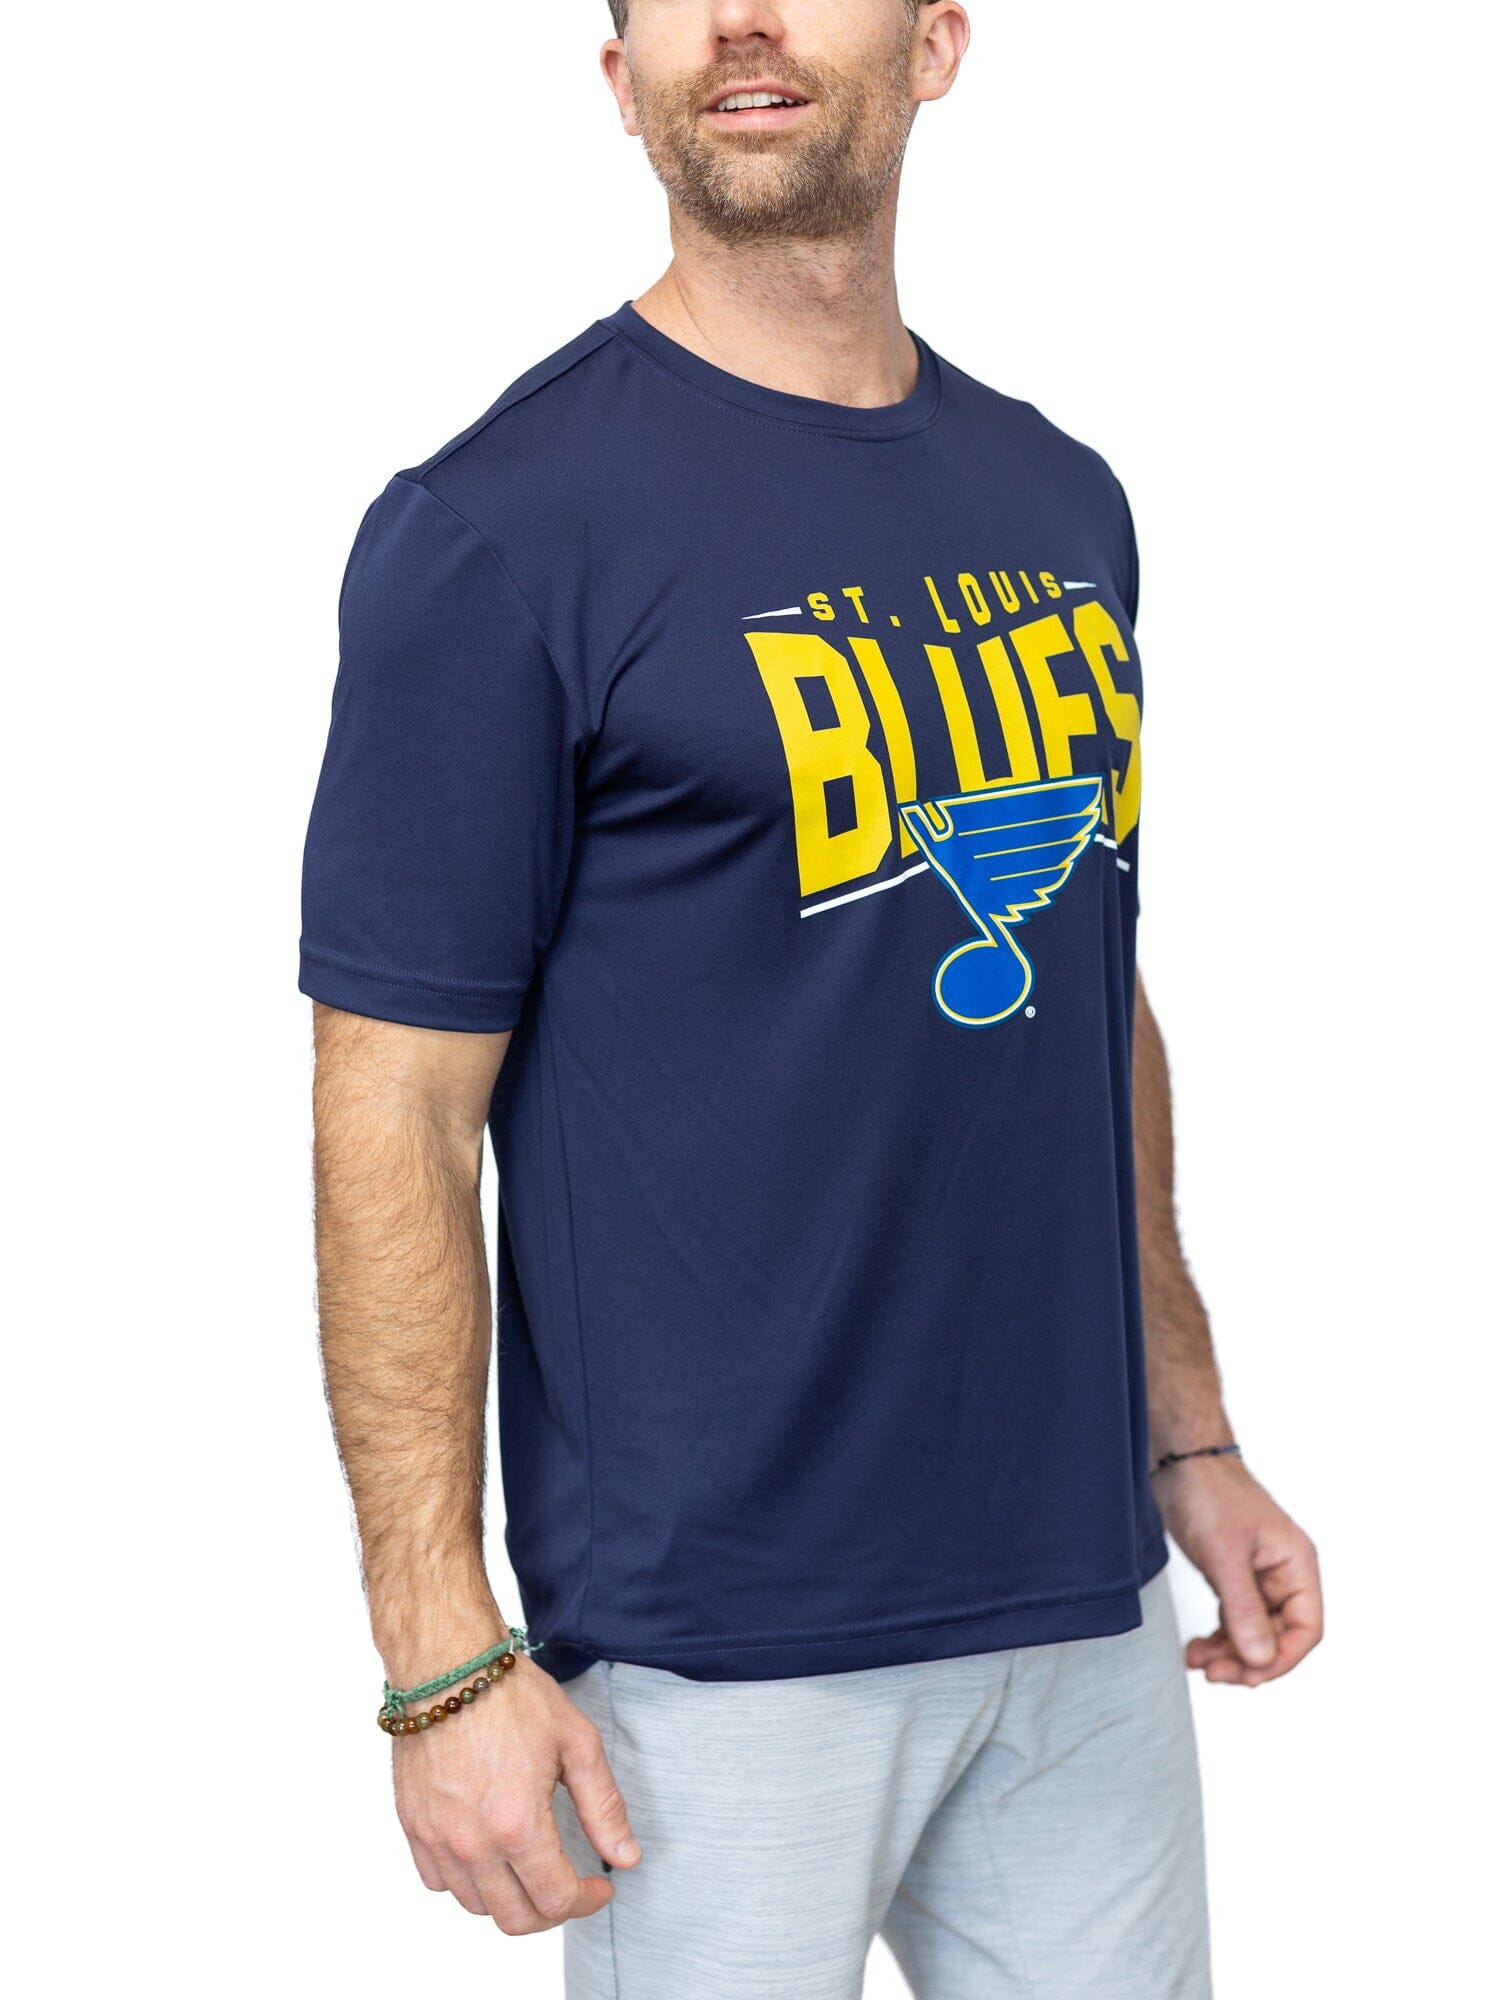 St. Louis Blues "Full Fandom" Moisture Wicking T-Shirt - Front 2